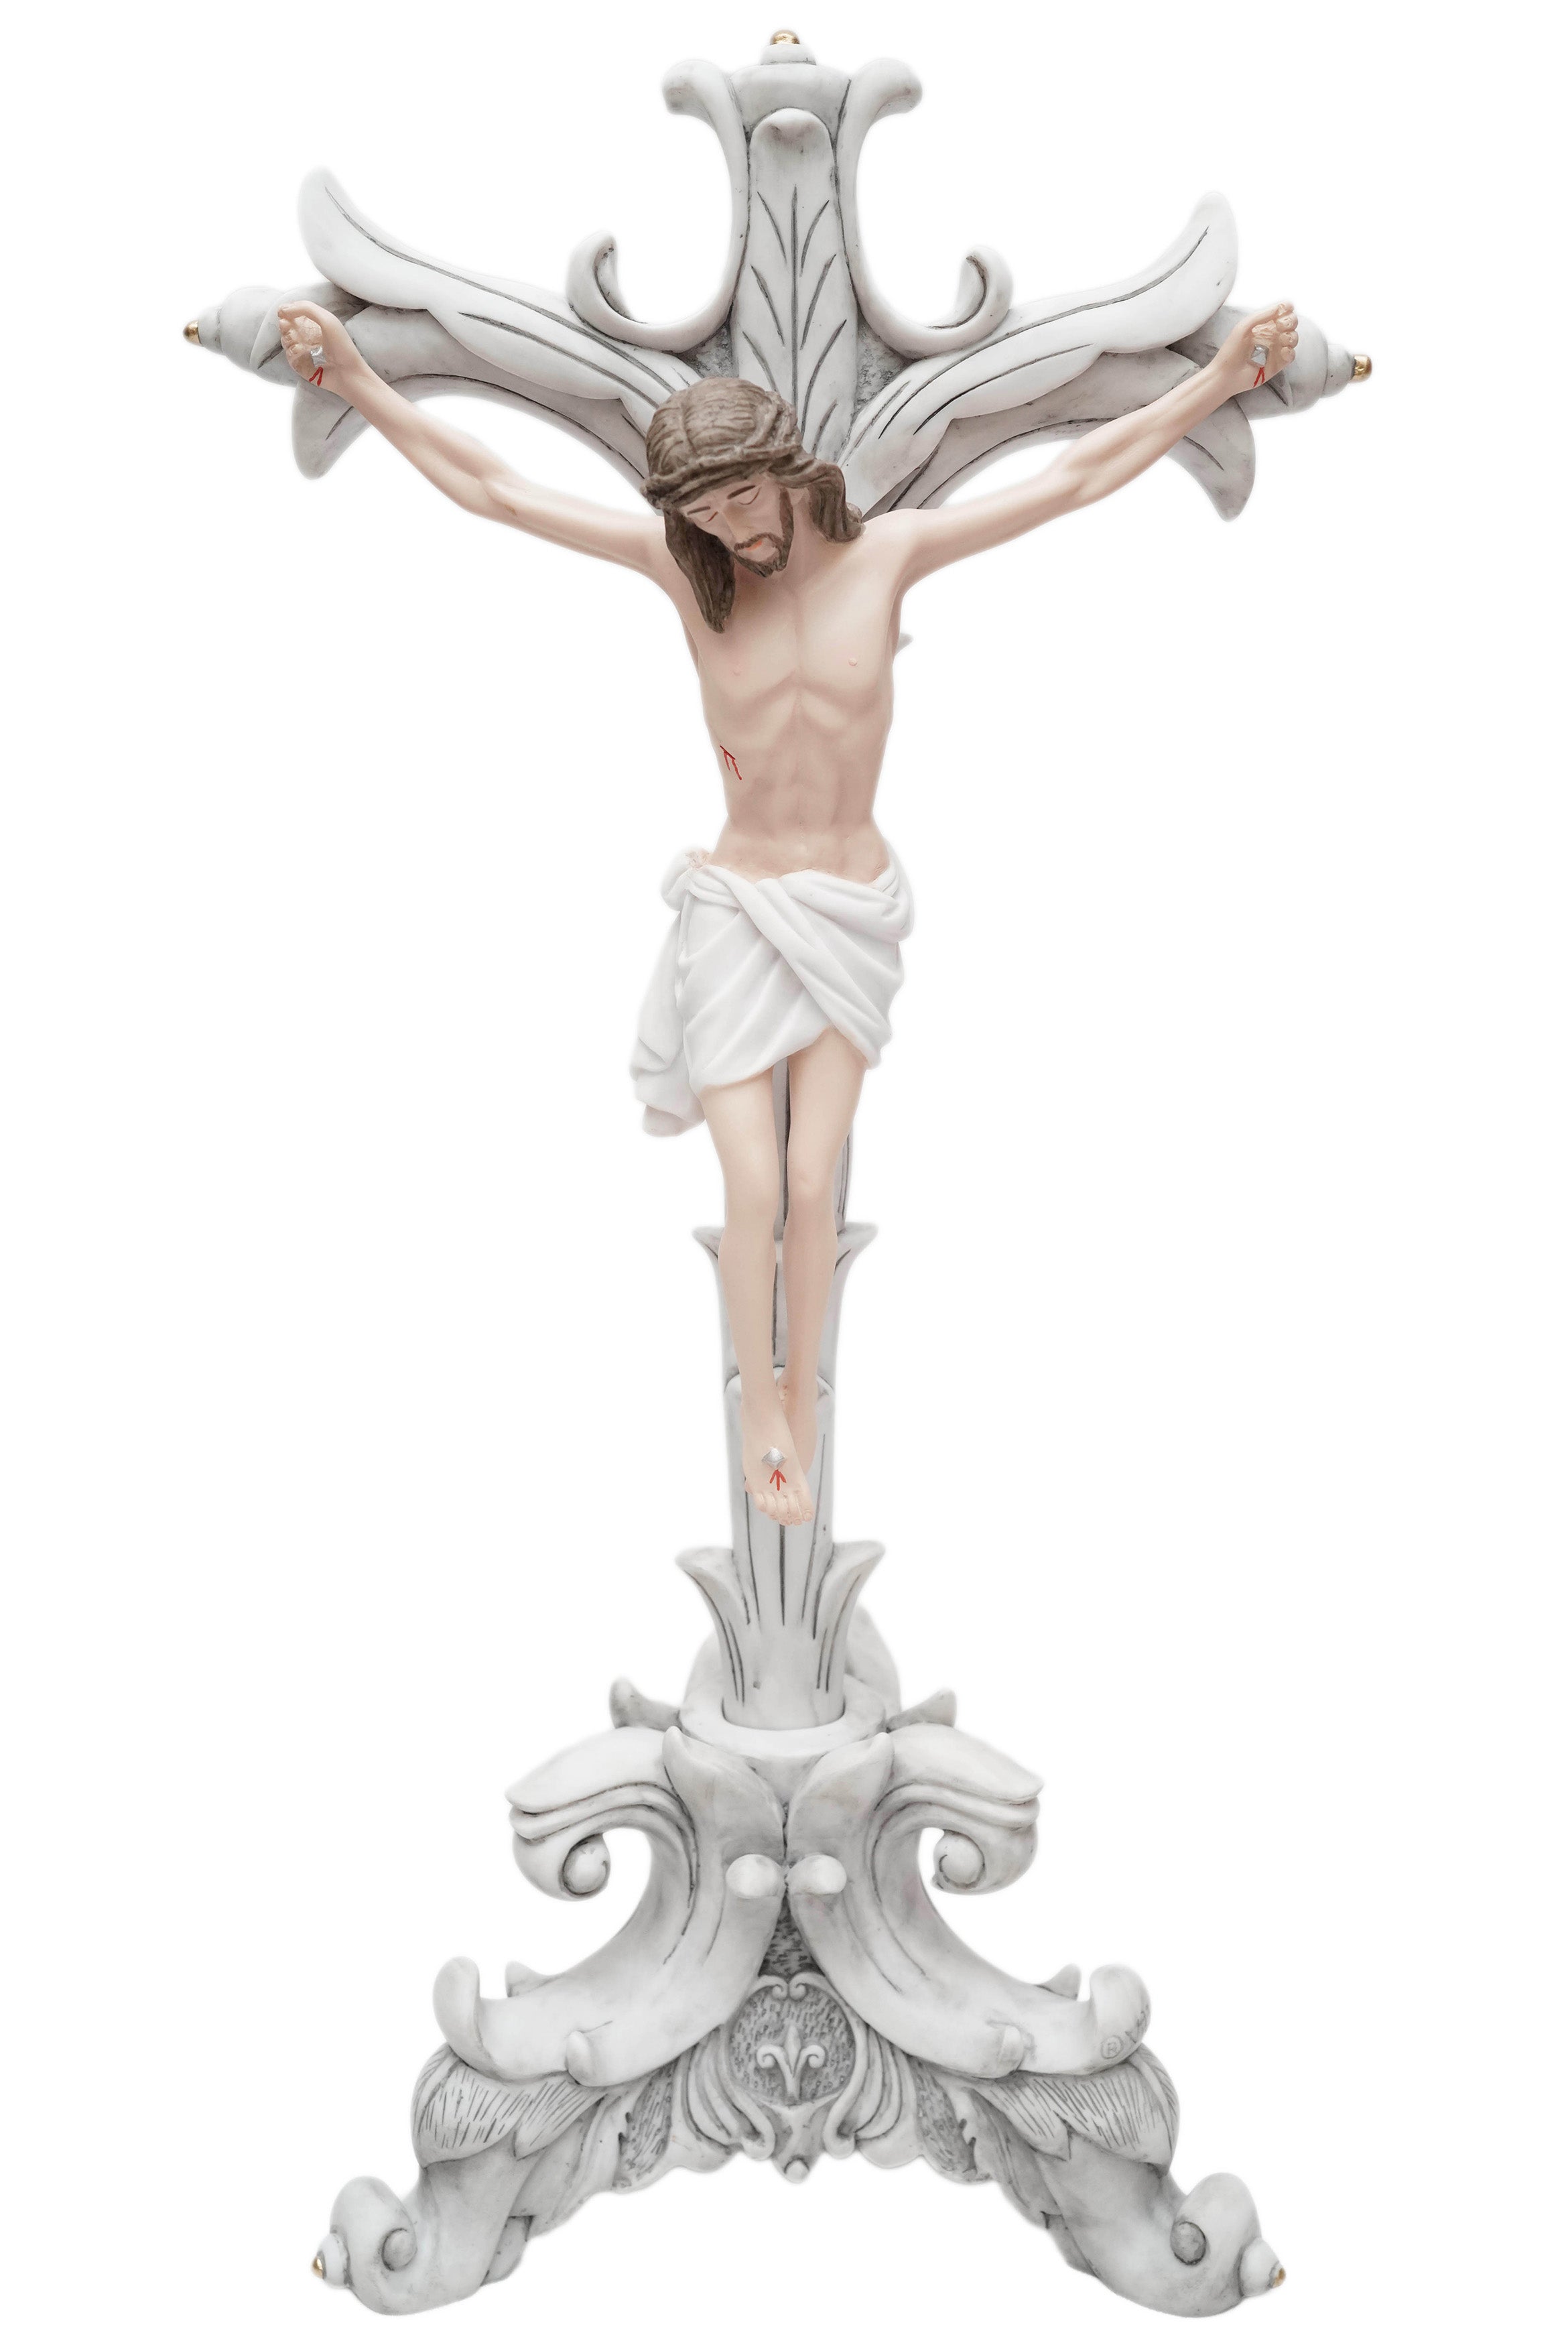 jesus on cross statue